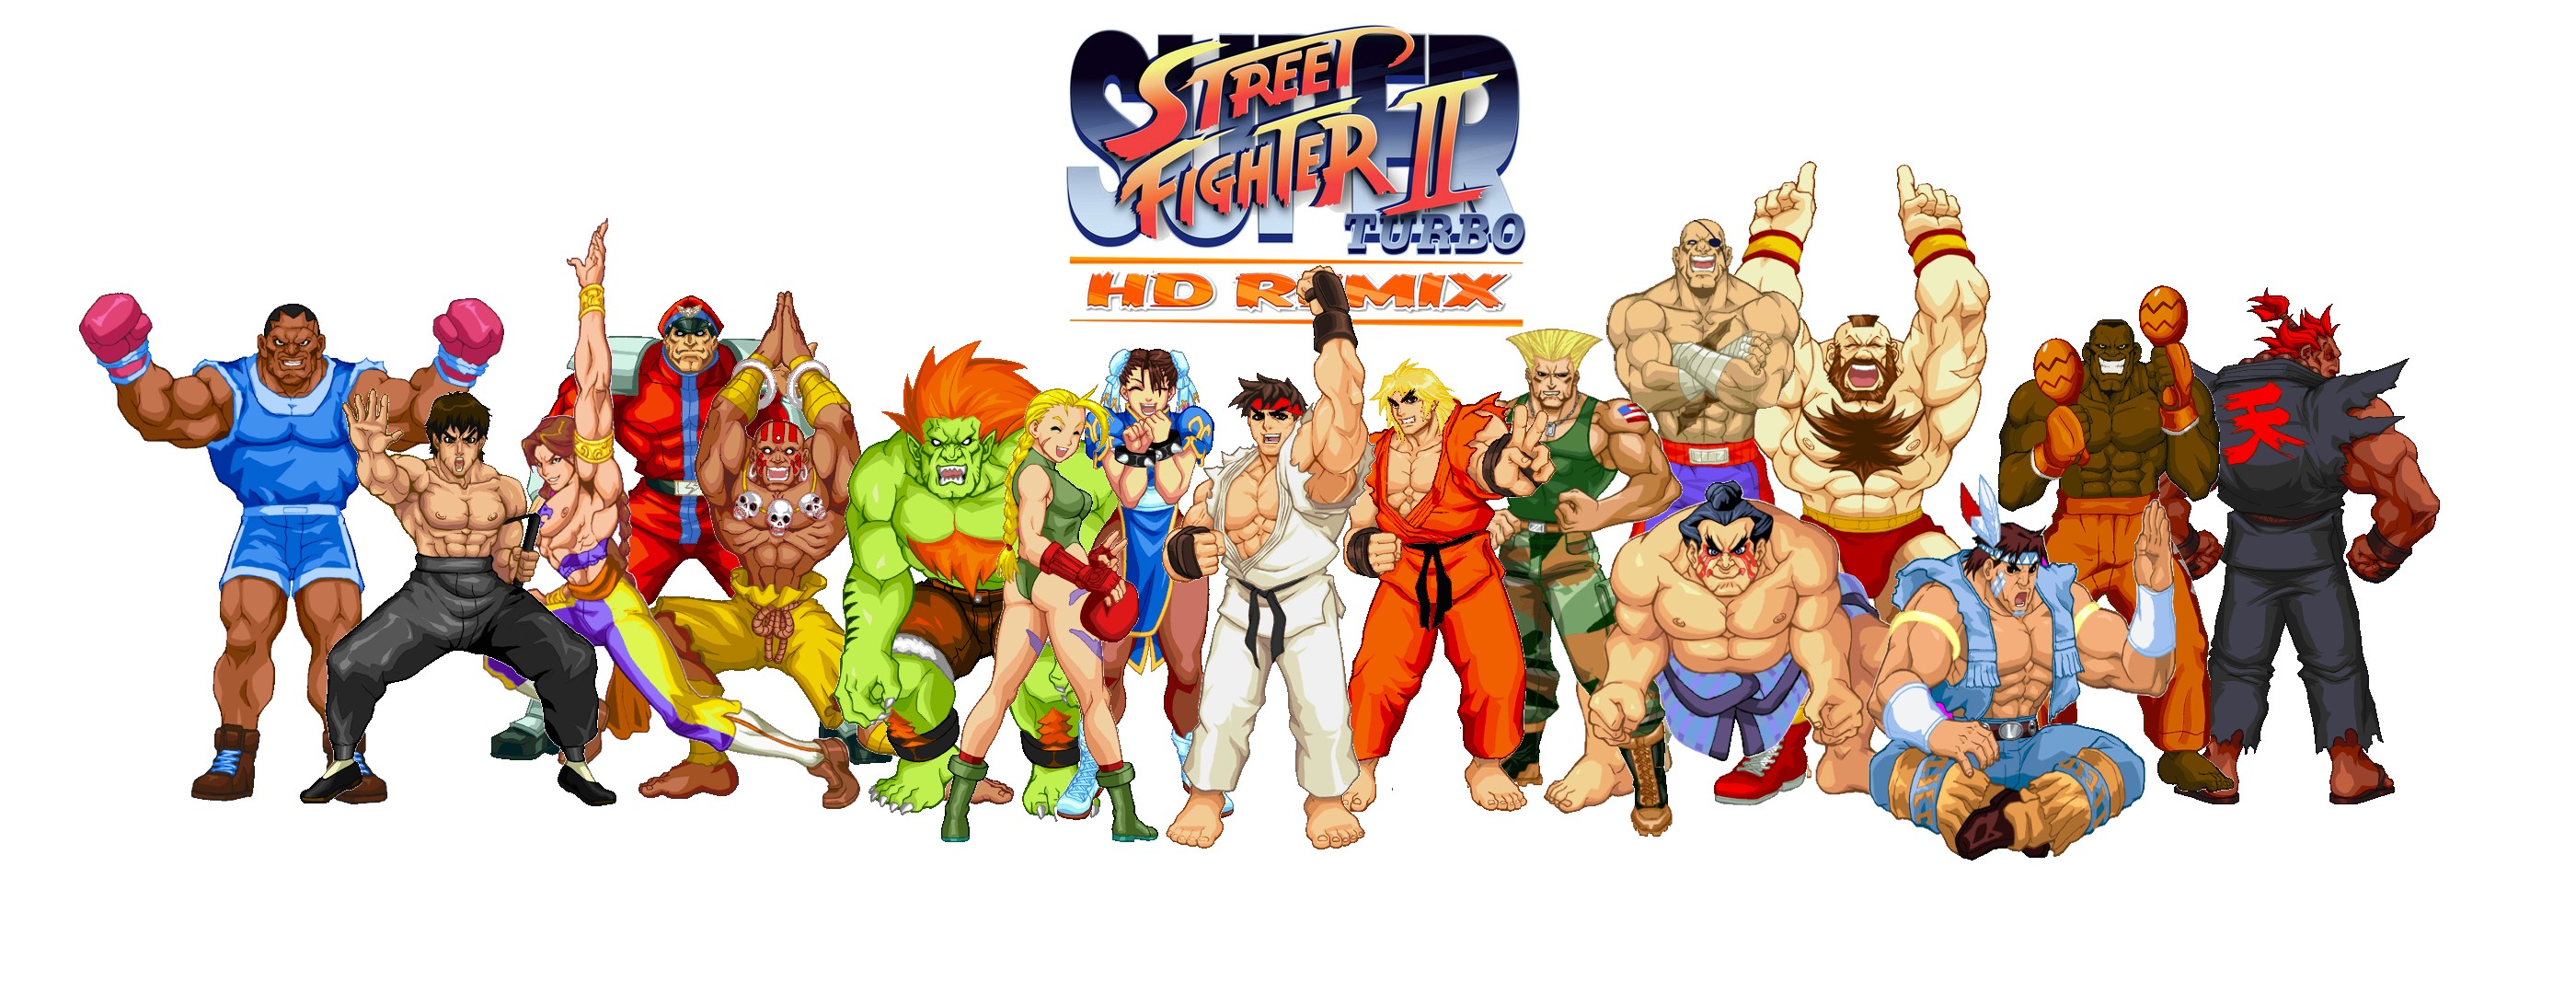 Super Street Fighter II #22